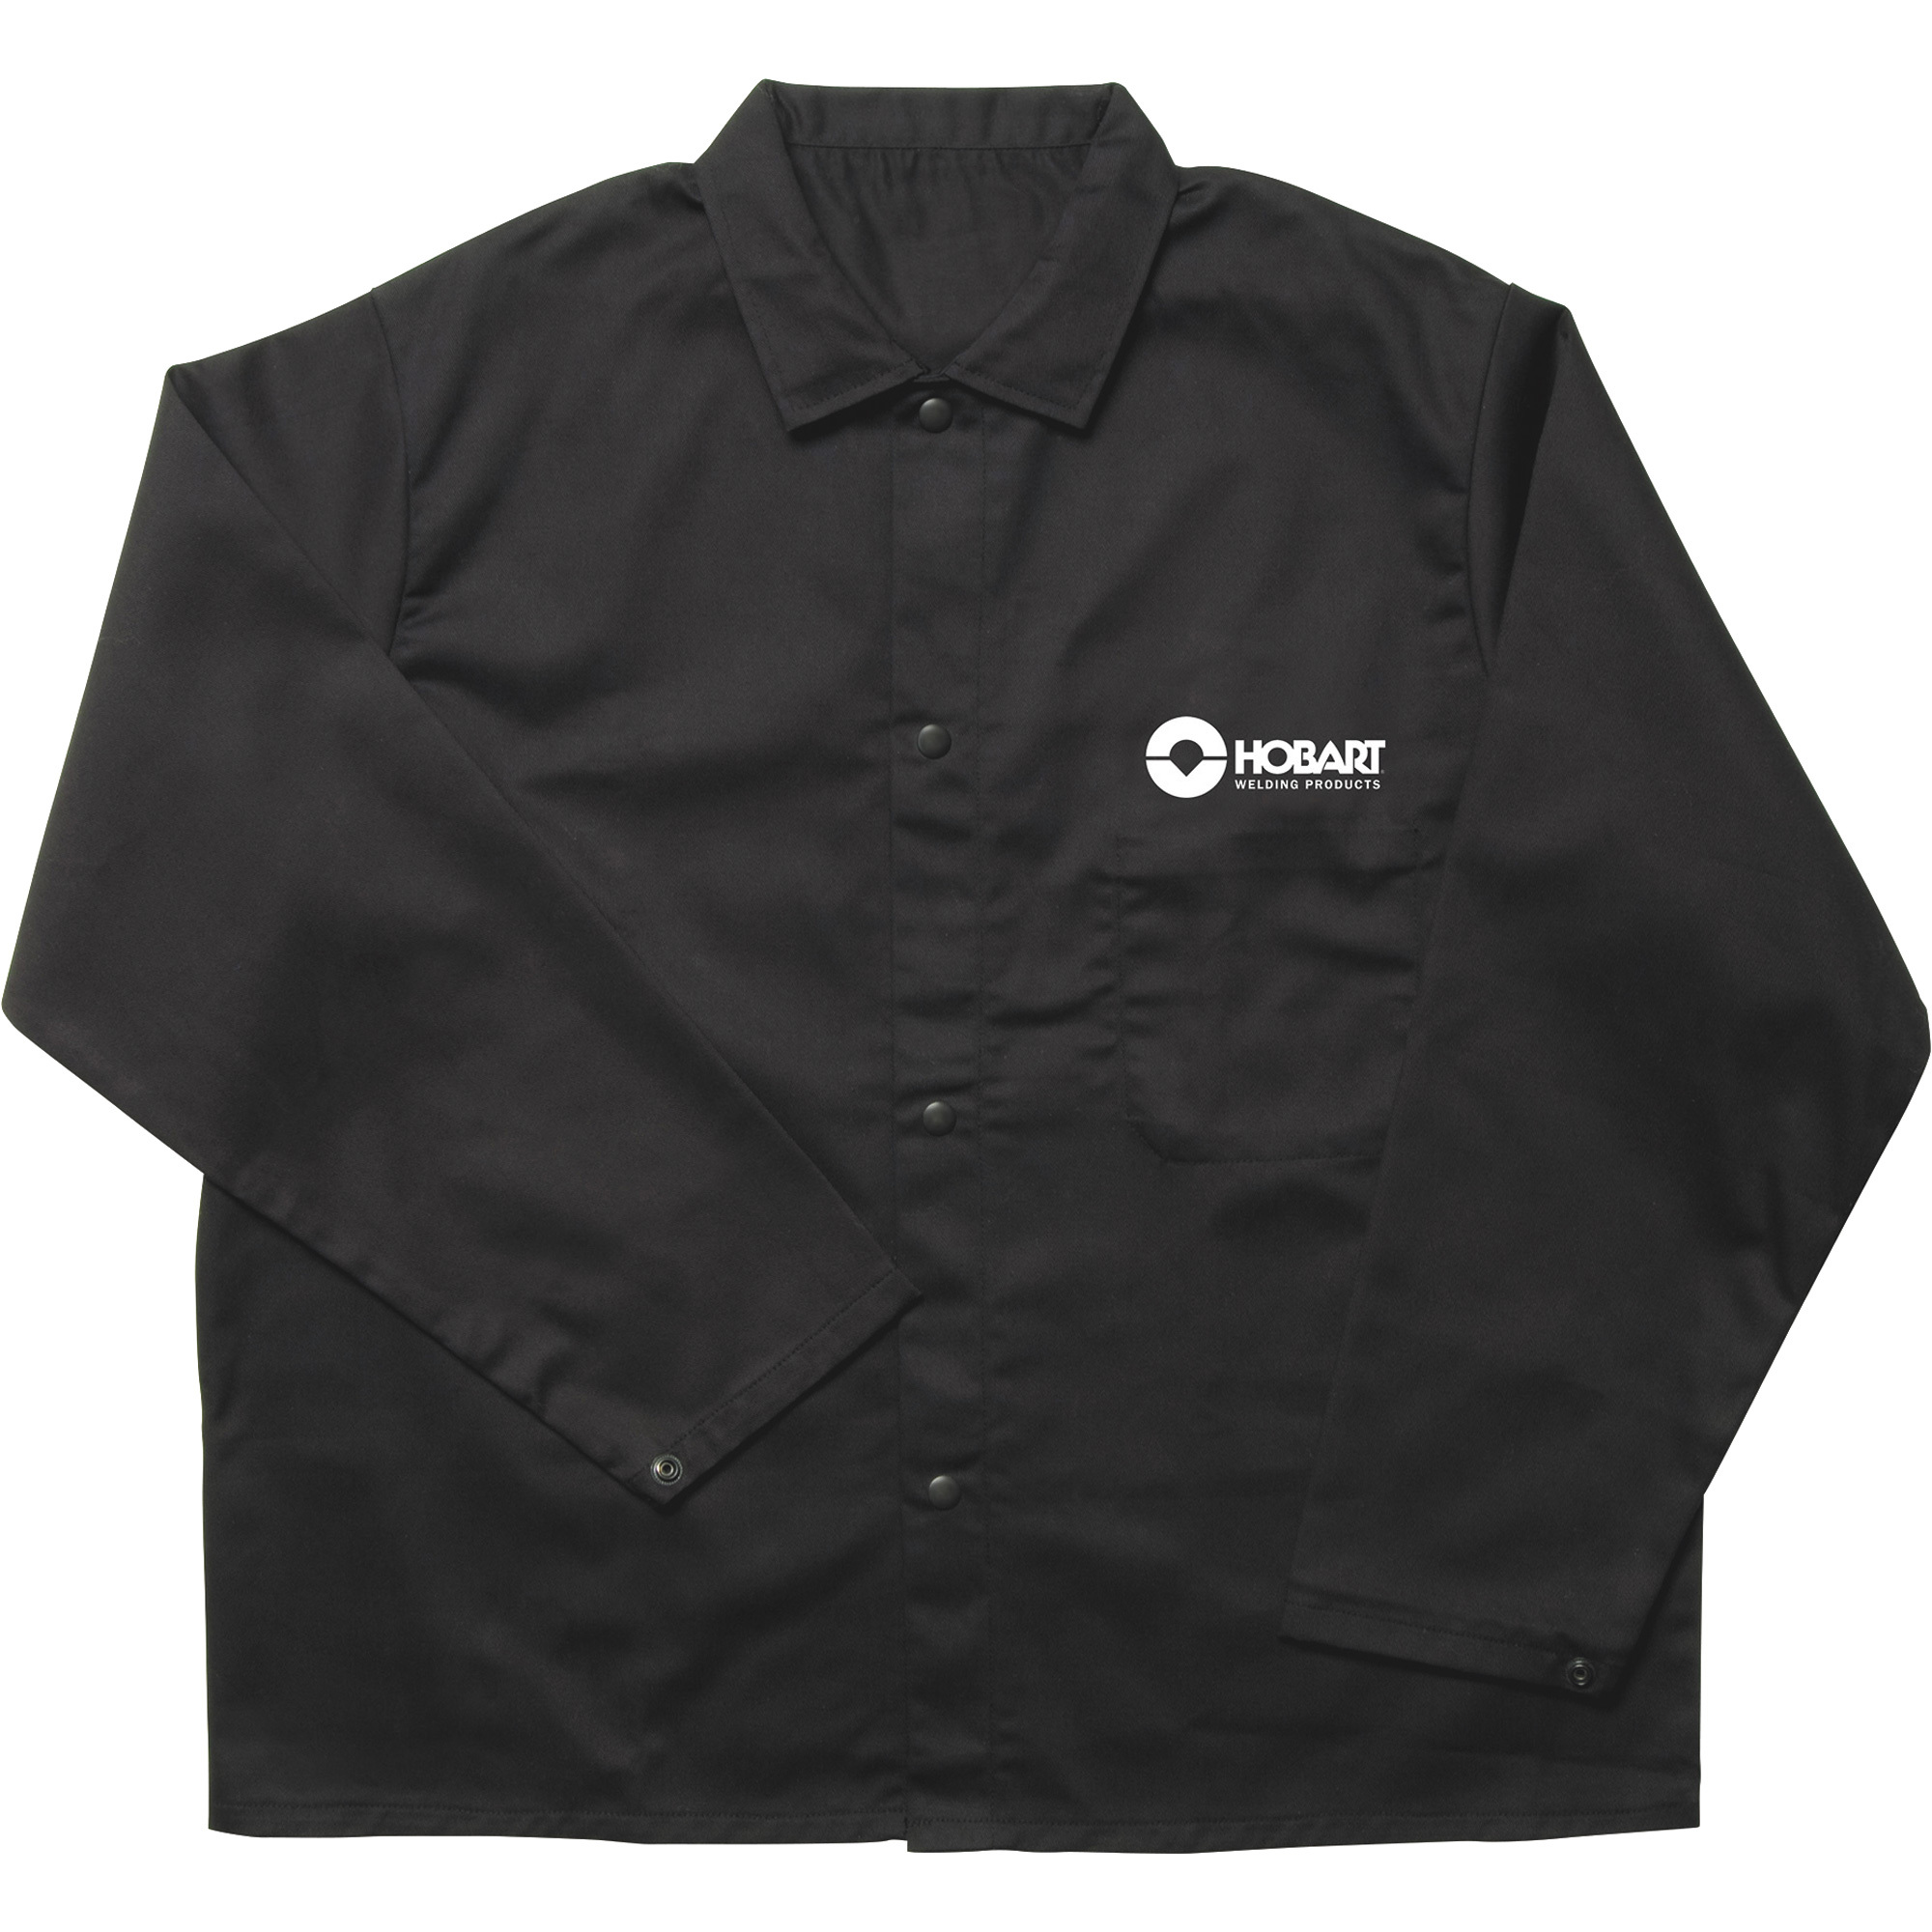 Hobart Welding Jacket - Flame-Retardant Cotton, Black, XX-Large, Model 770568